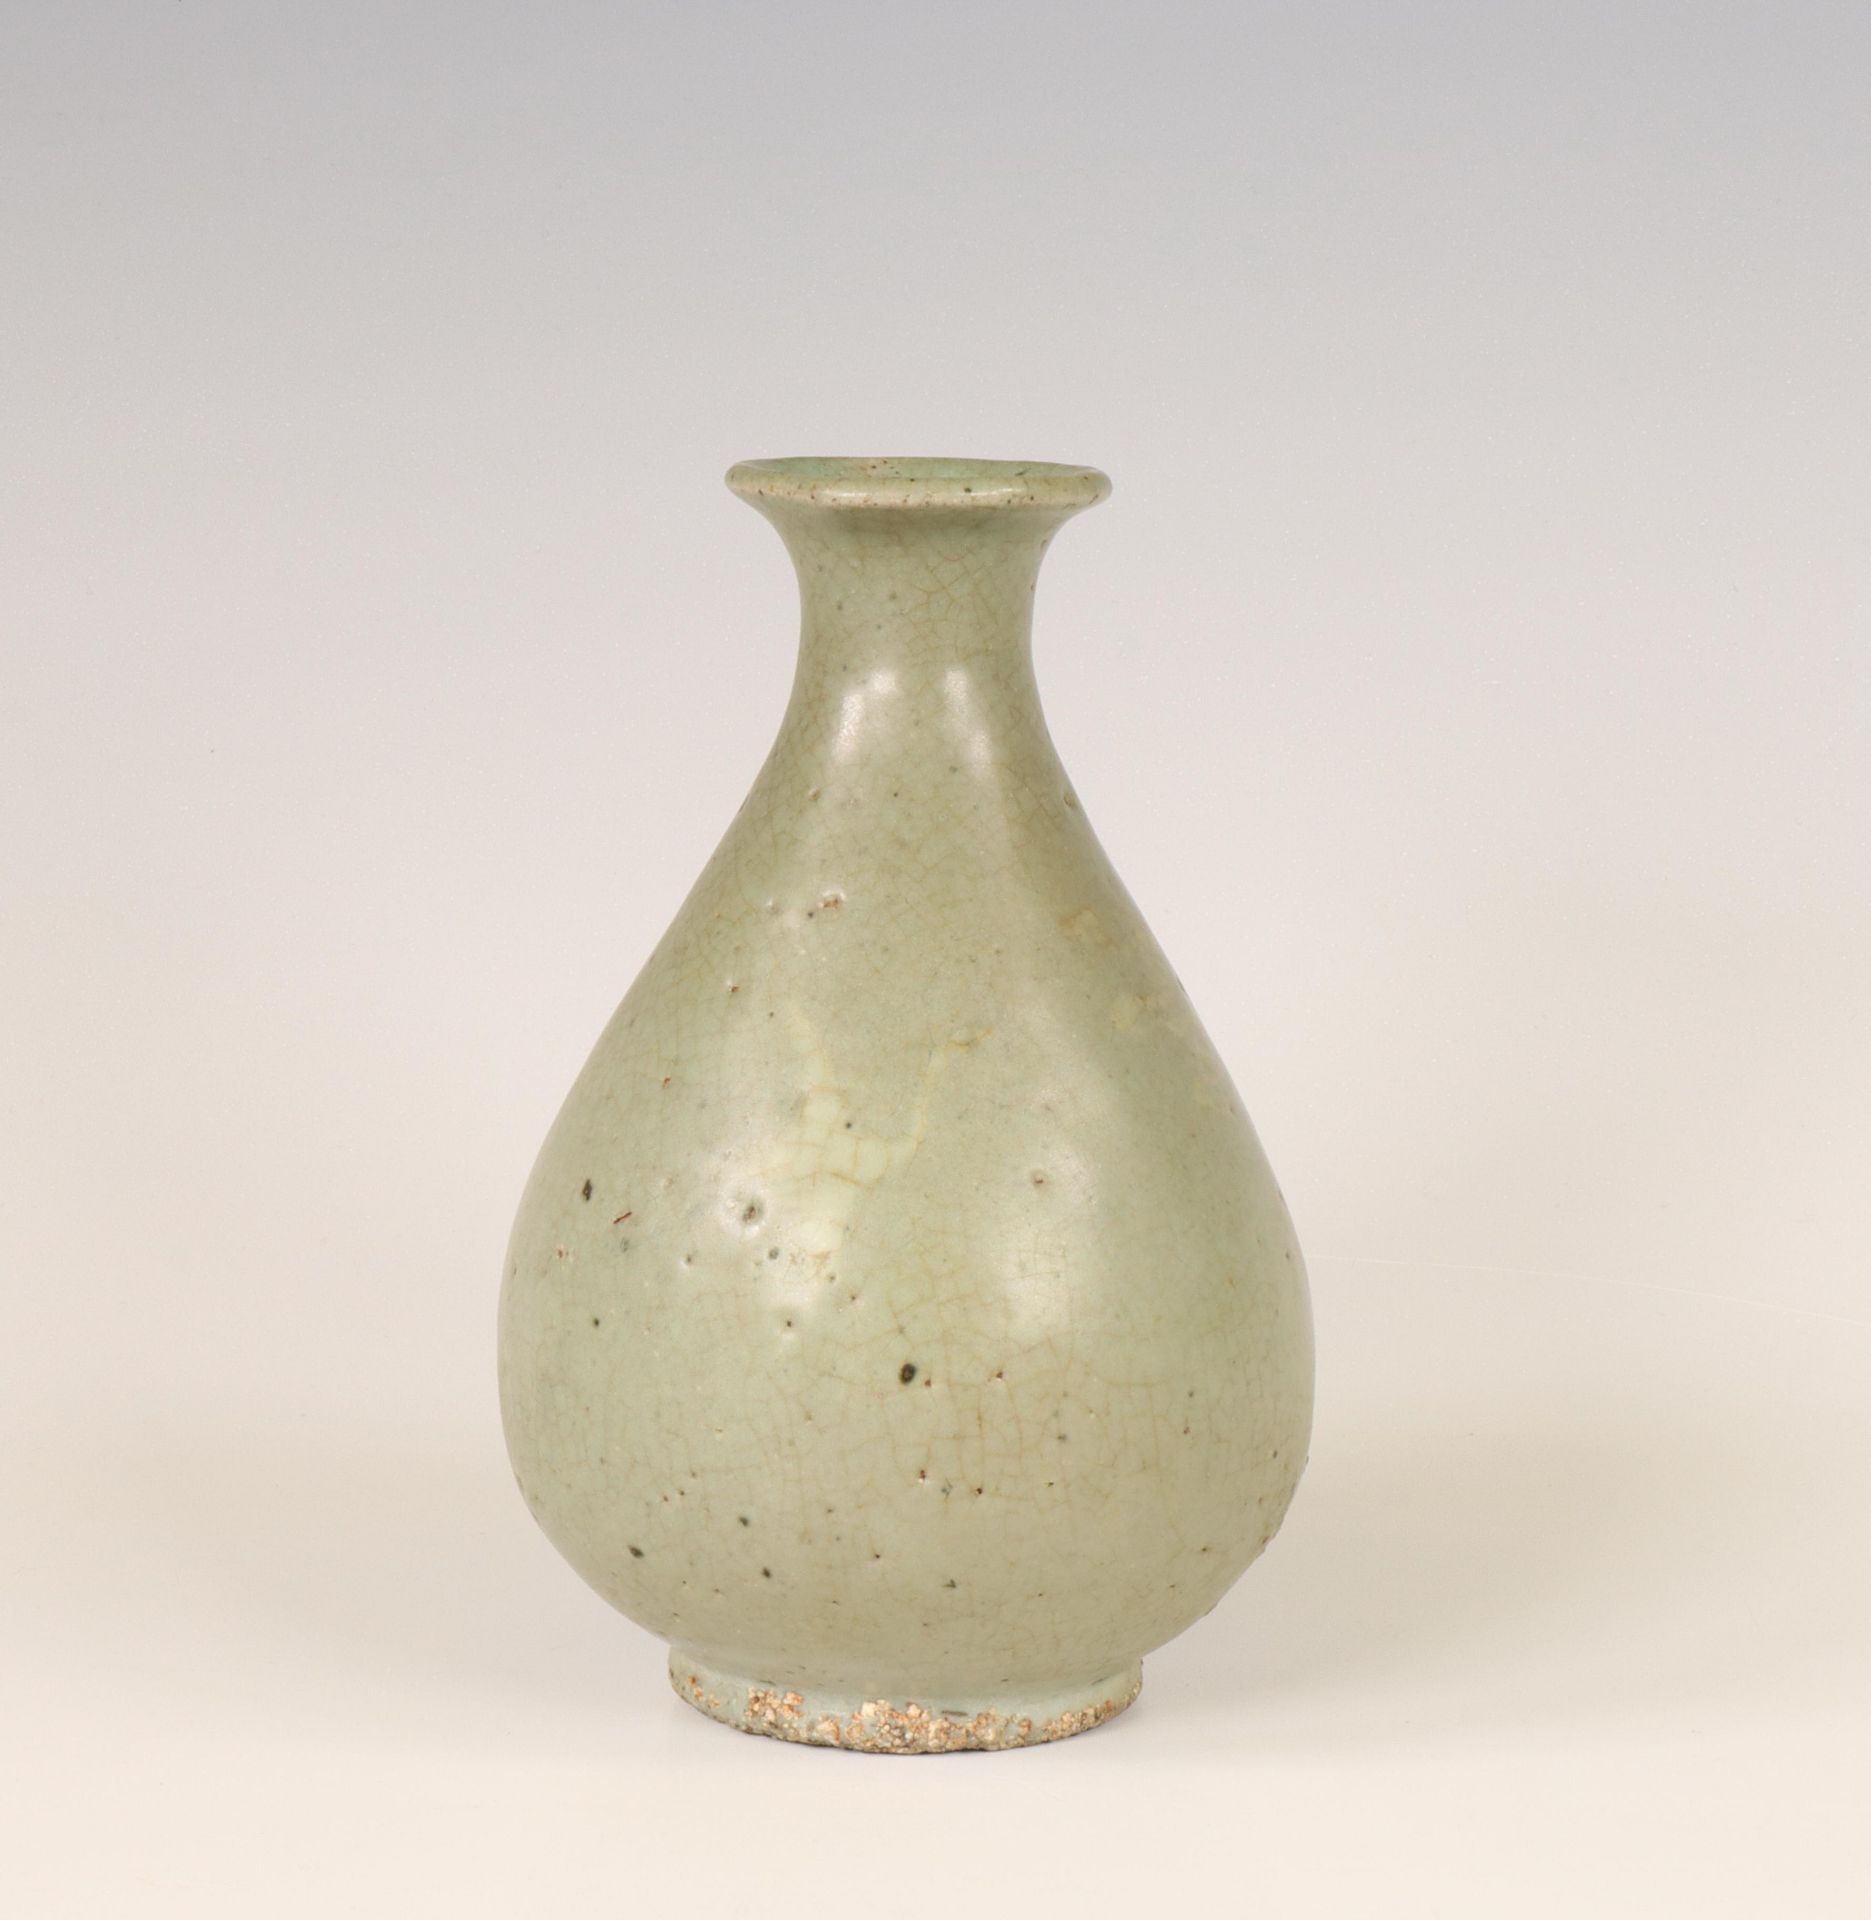 Korea, celadon-glazed vase, late Goryo/ early Joseon dynasty, 14th-15th century,